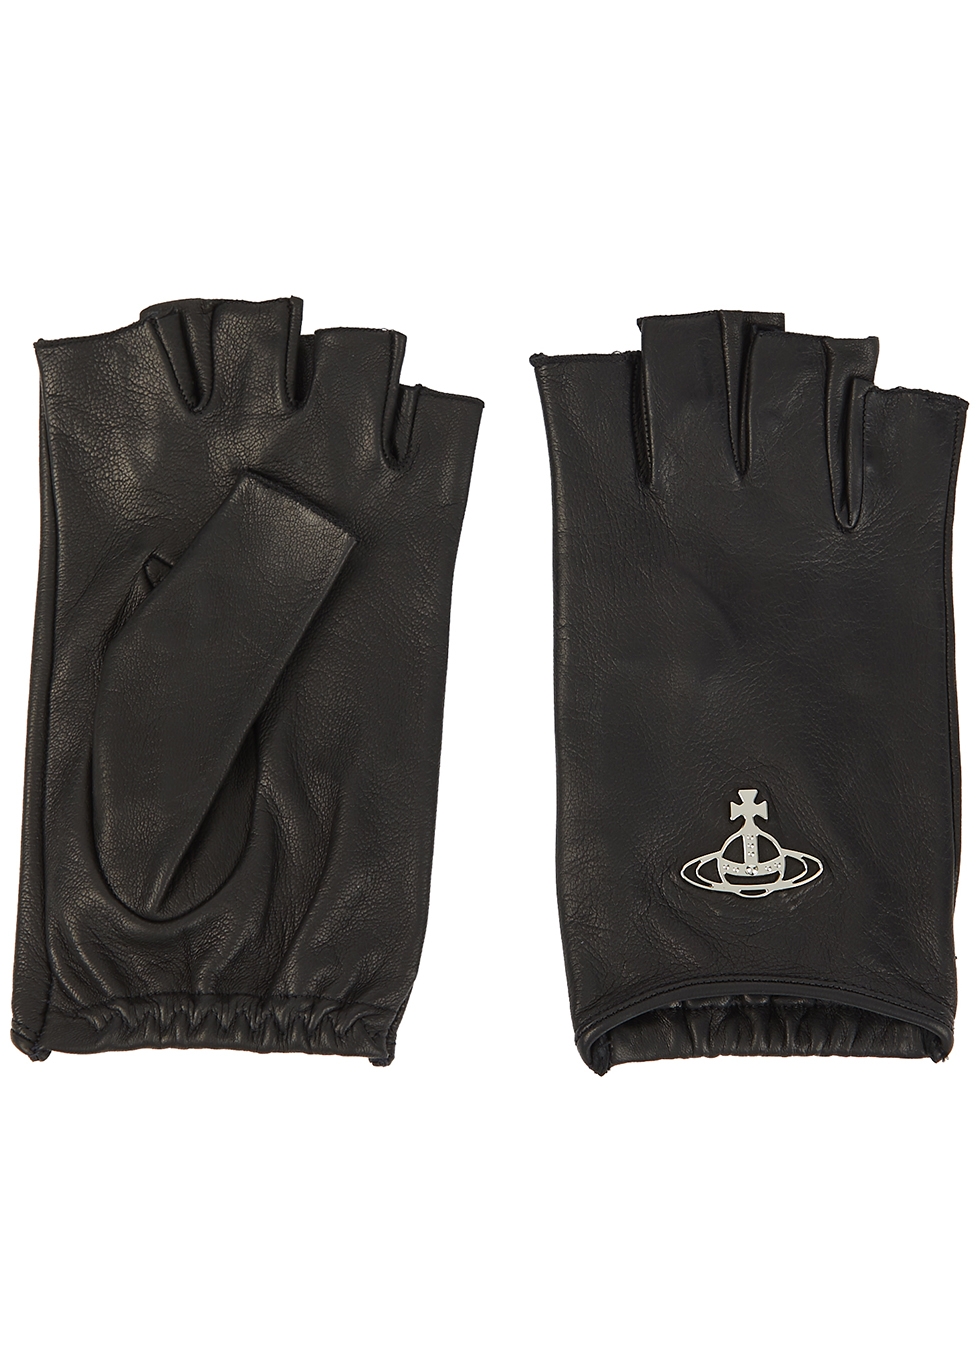 Vivienne Westwood Black leather fingerless gloves